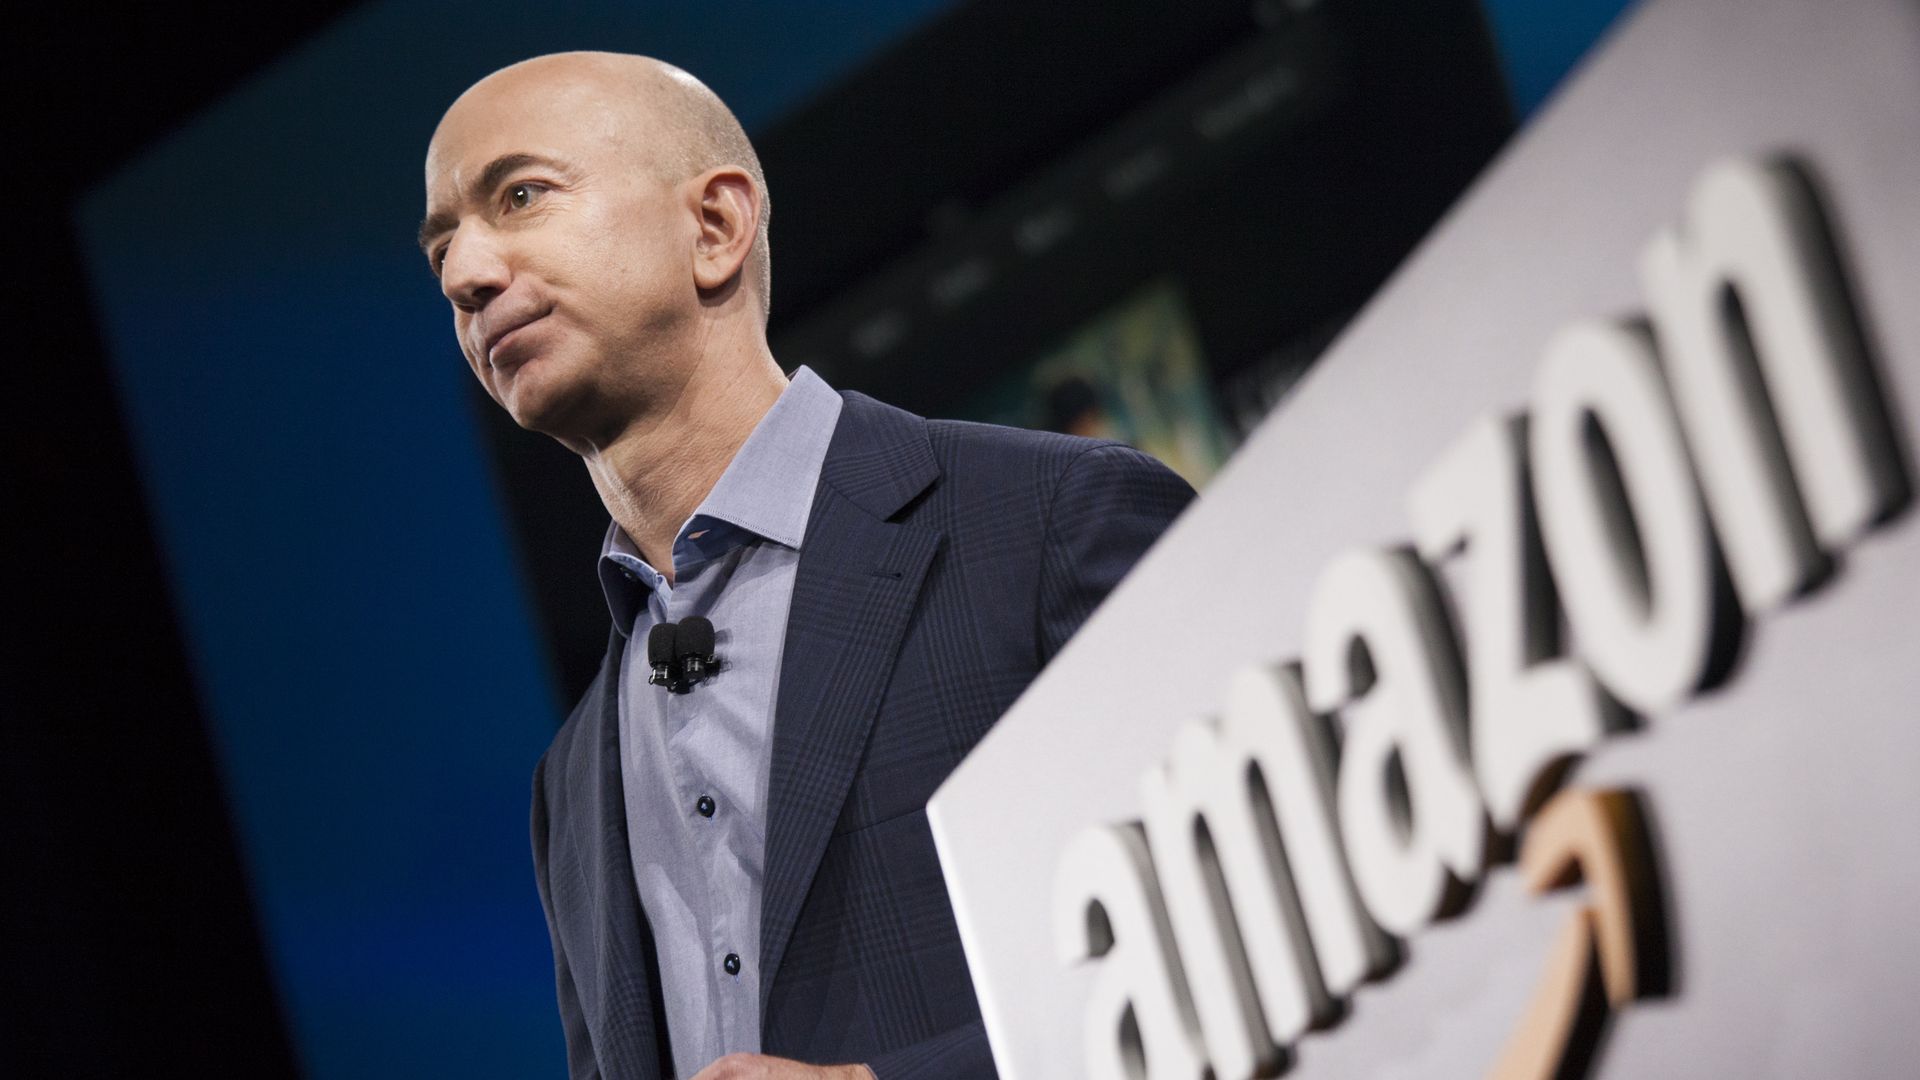 Jeff Bezos in front of an Amazon logo